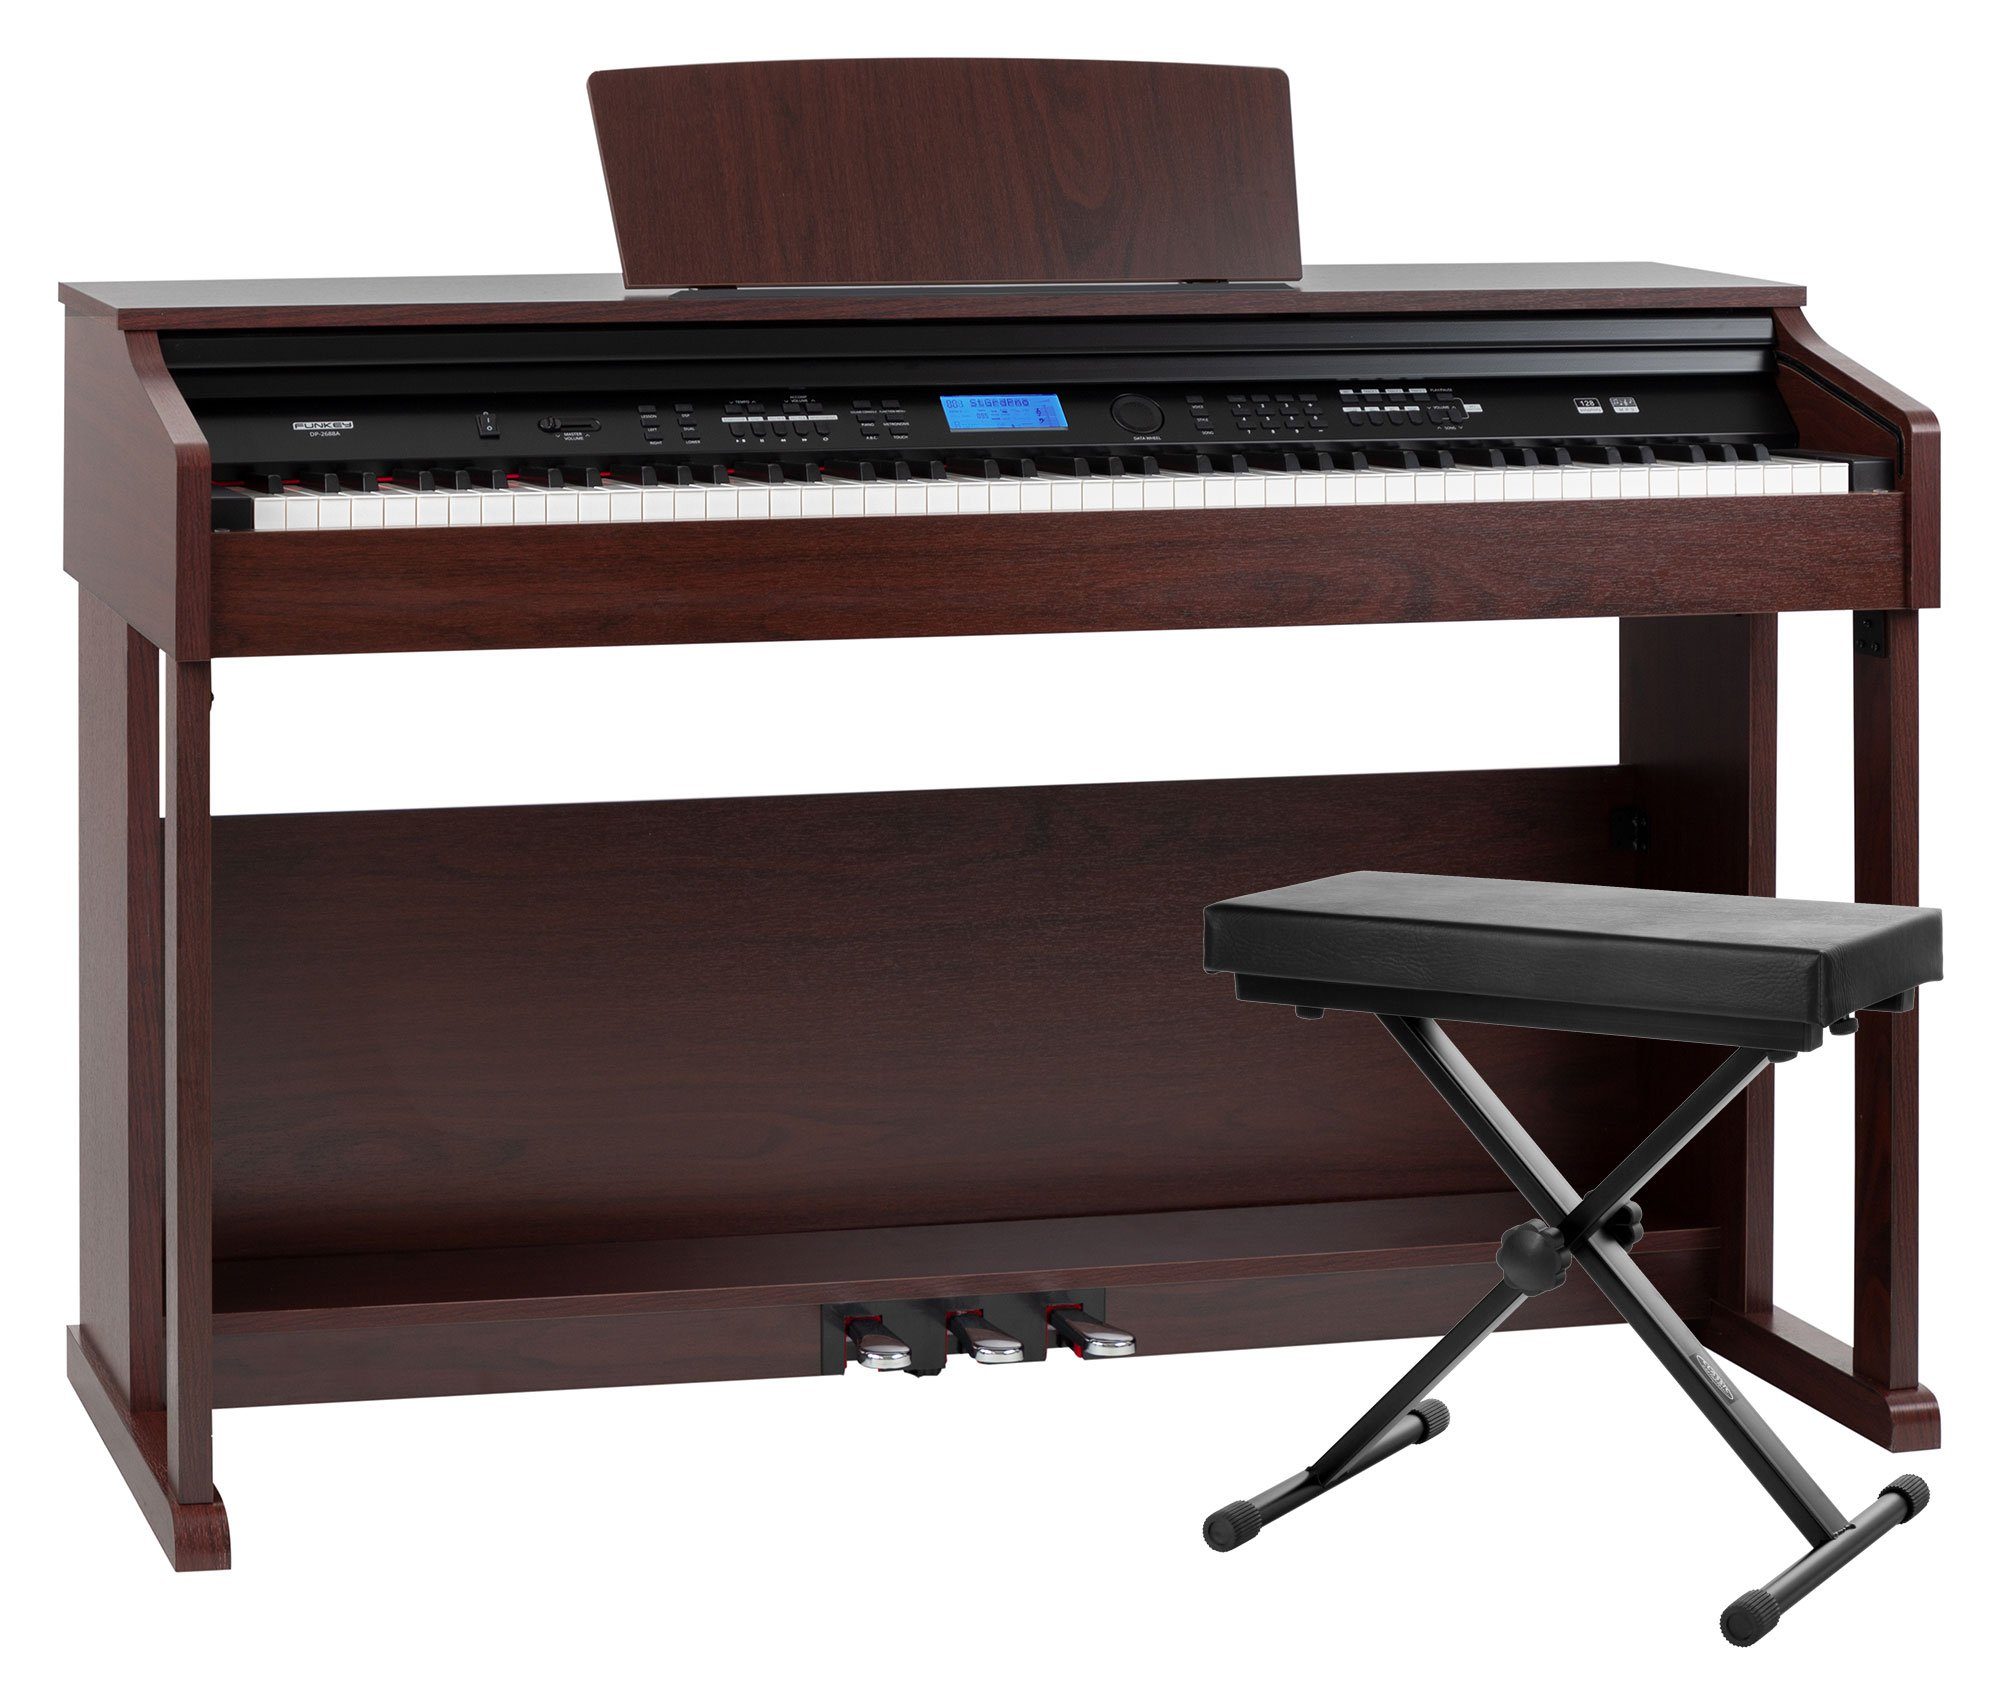 FunKey Digitalpiano DP-2688A E-Piano - 88 anschlagsdynamische Tasten -  Hammermechanik, (Spar-Set, 2 tlg., inkl. Deluxe-Keyboardbank),  Lernfunktion, Record- & Playback-Funktion